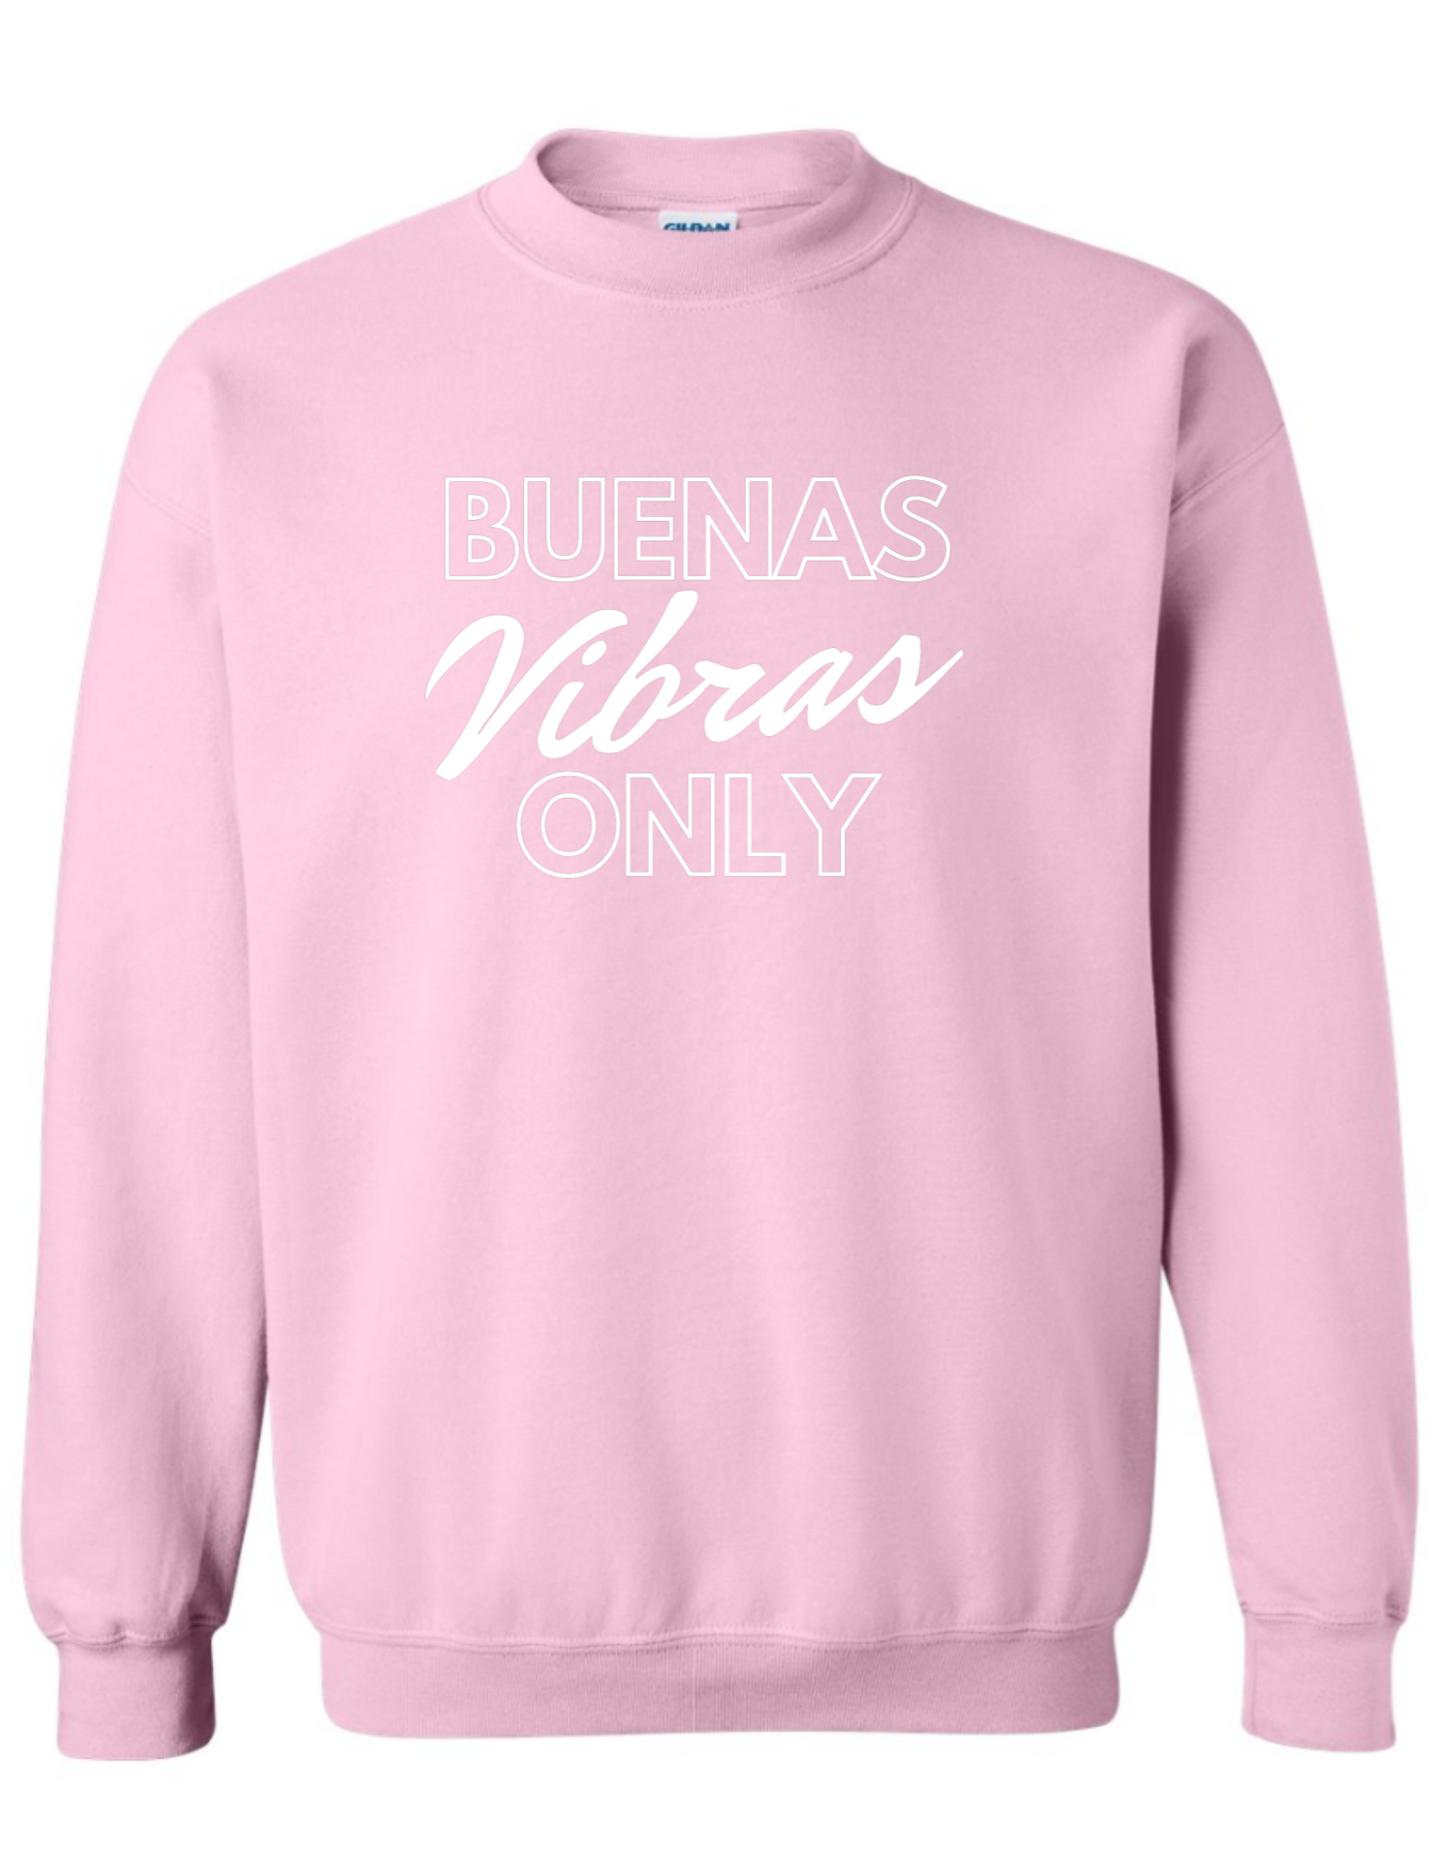 Buenas Vibras Only Sweatshirt (Pink)